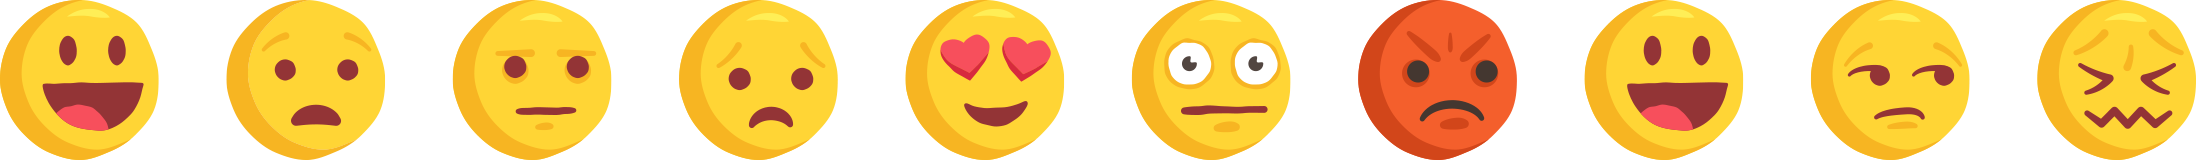 Emojis In A Line